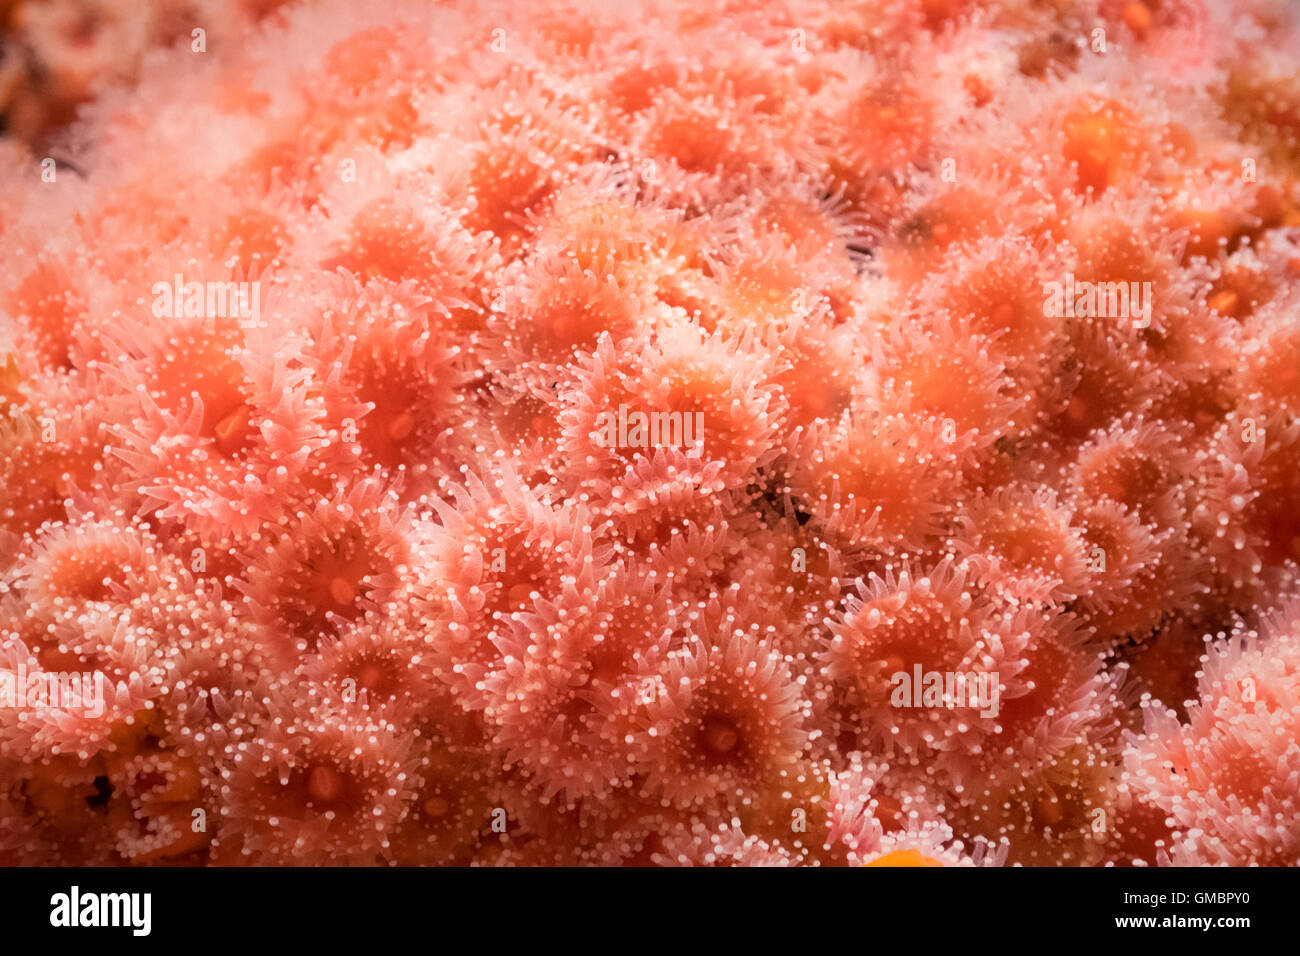 Strawberry anemone (Corynactis californica) at the Vancouver Aquarium in Vancouver, British Columbia, Canada. Stock Photo